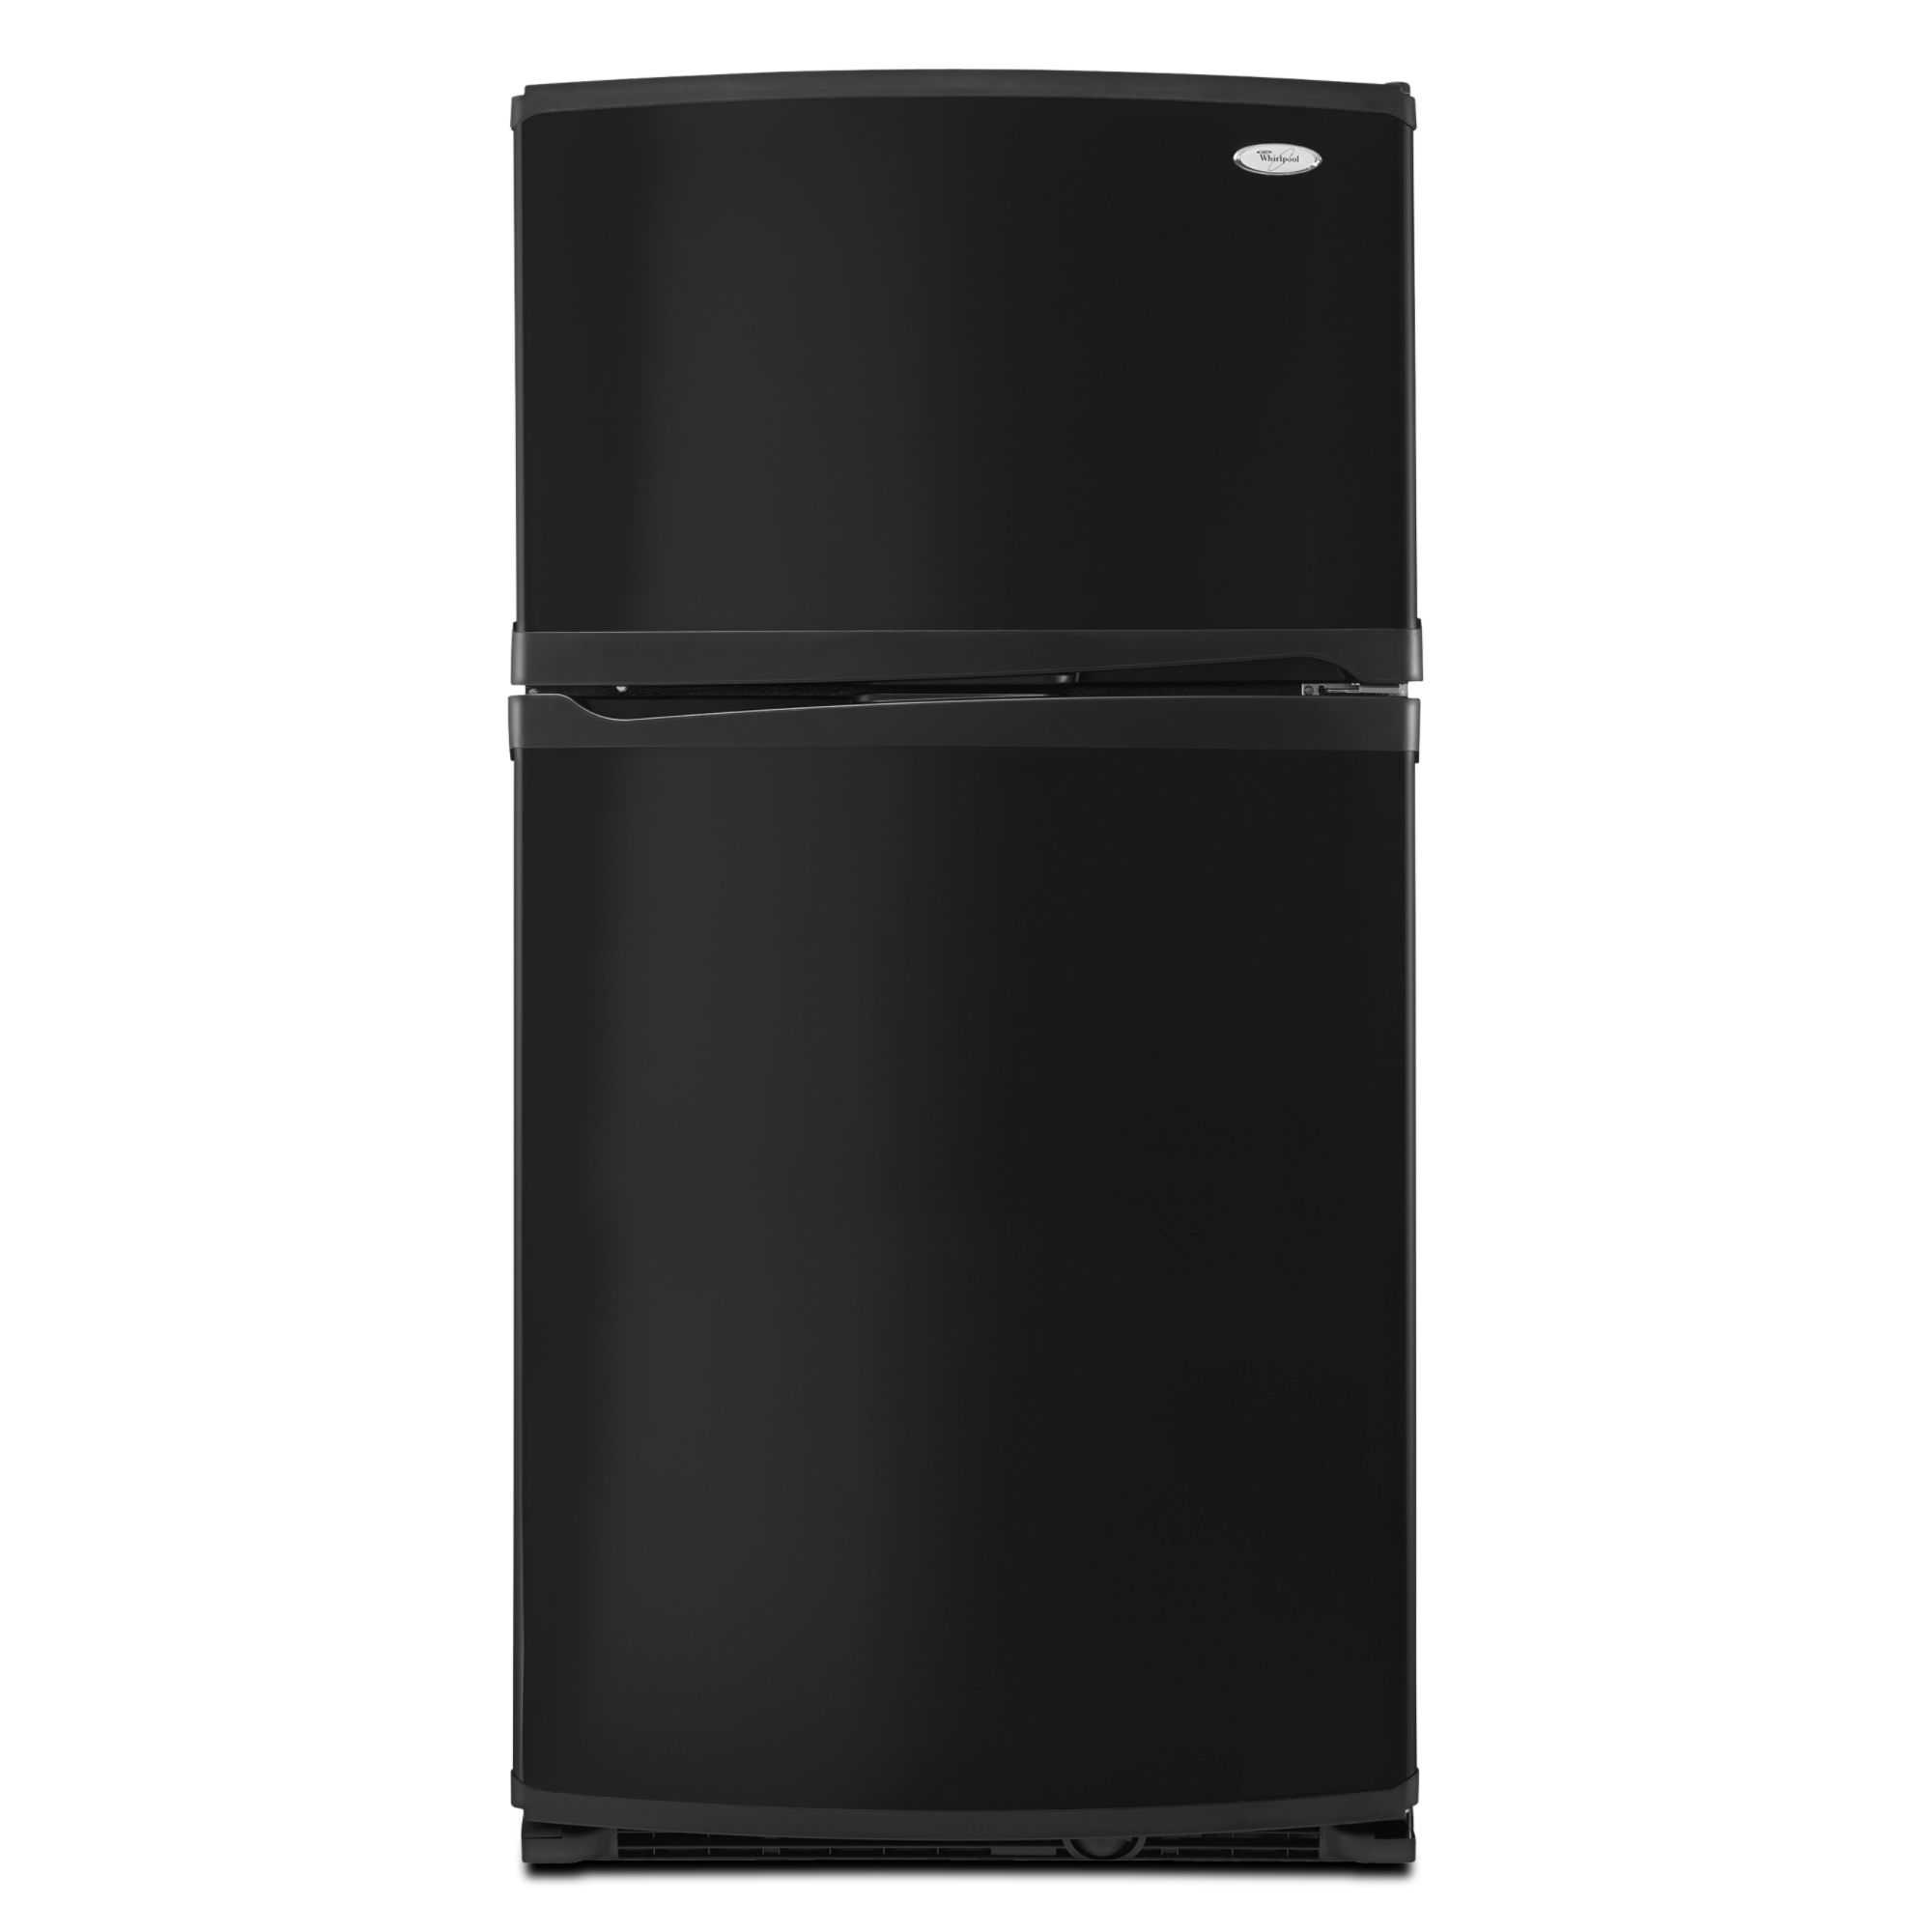 Whirlpool 18.9 cu. ft. Top-Freezer Refrigerator - Black